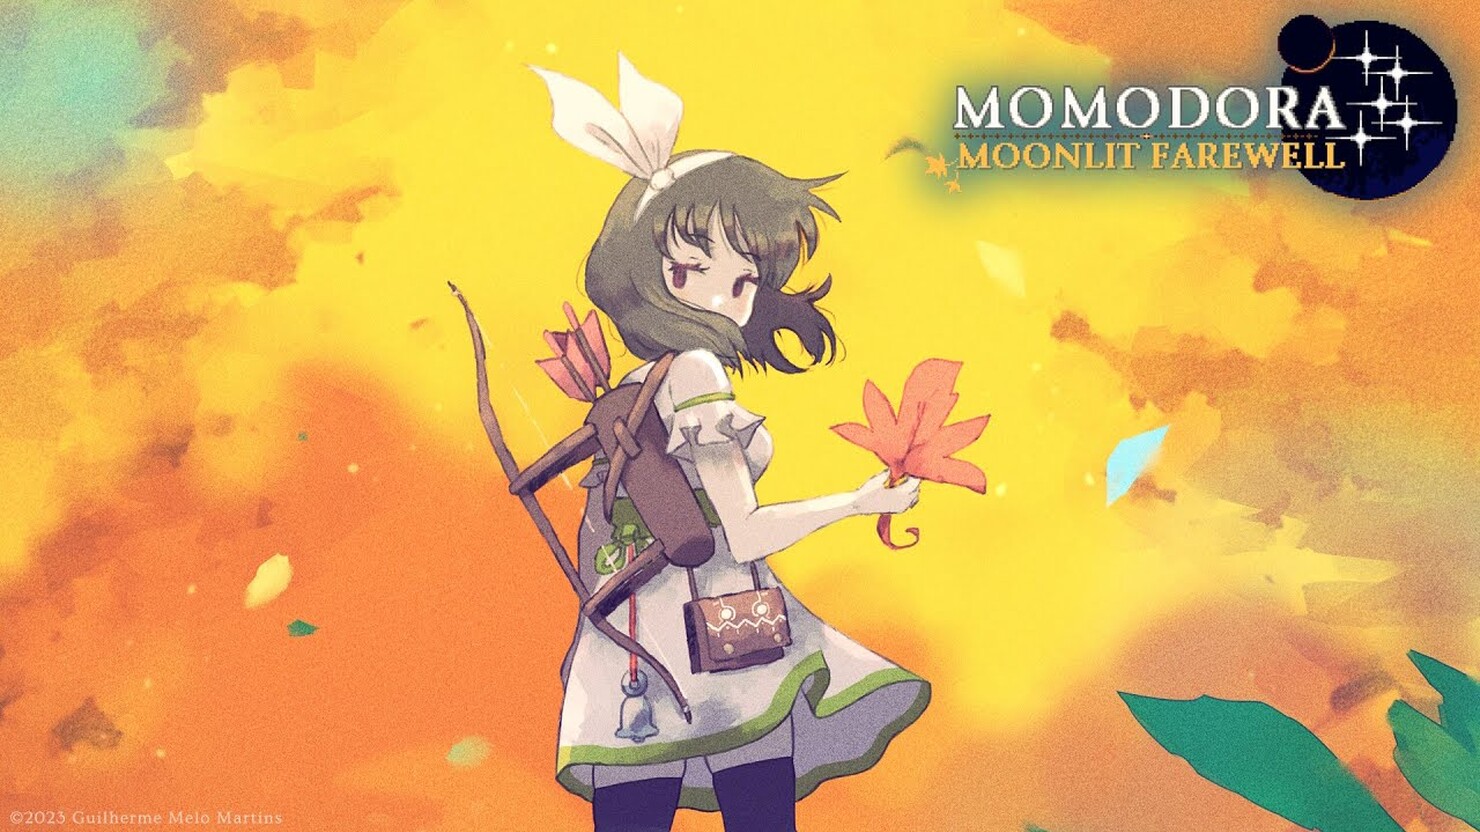 Momodora: Moonlit Farewell #6 (Останки неизвестного фантома)